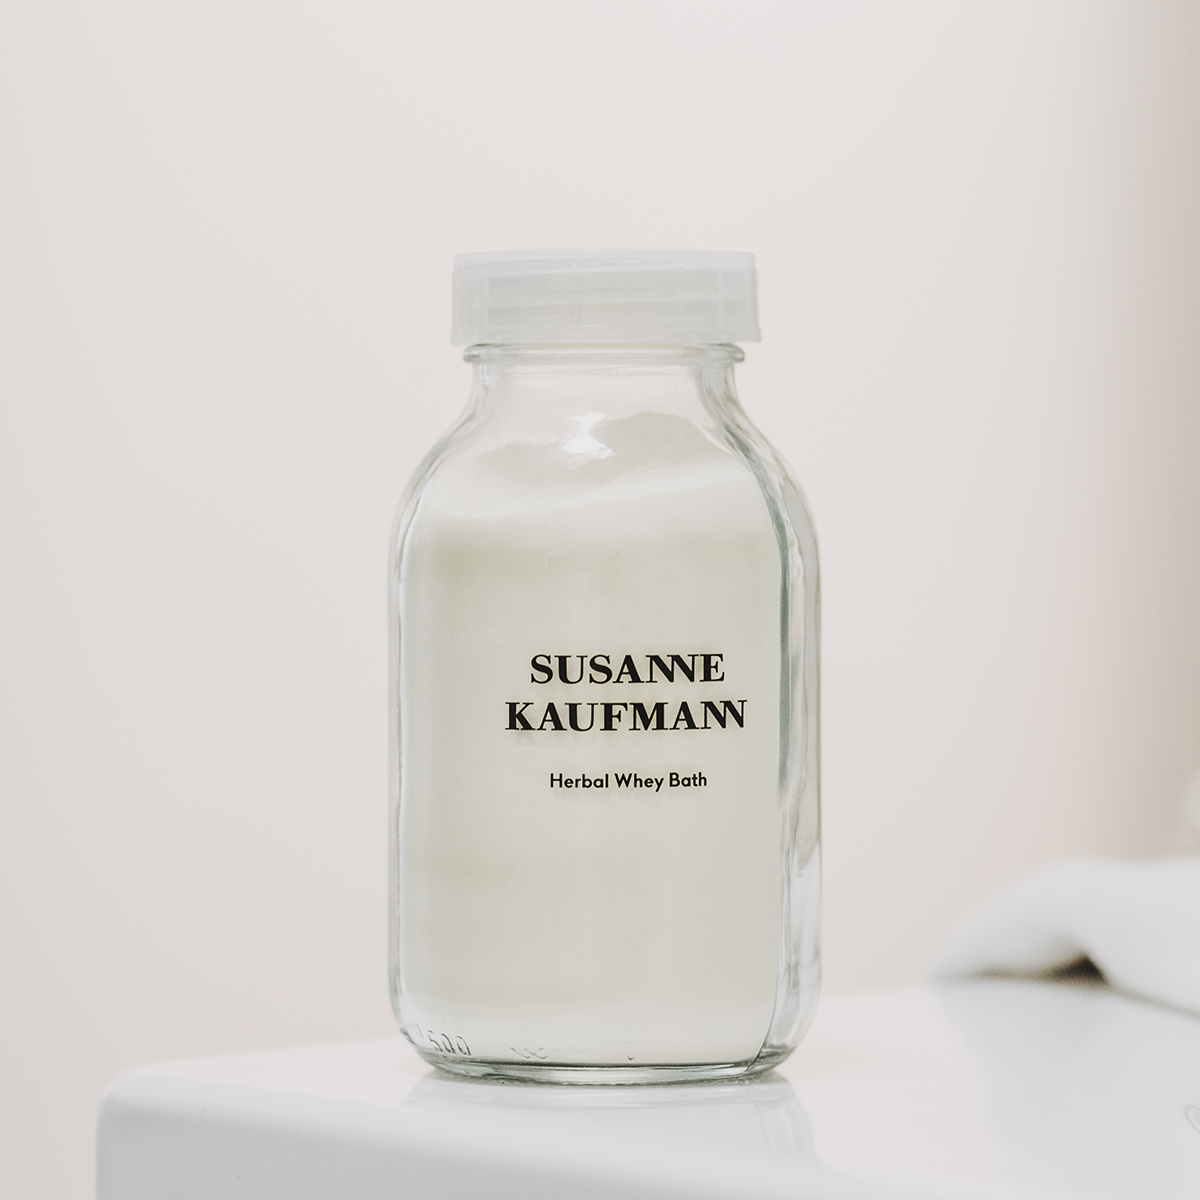 Susanne Kaufmann - Herbal Whey Bath